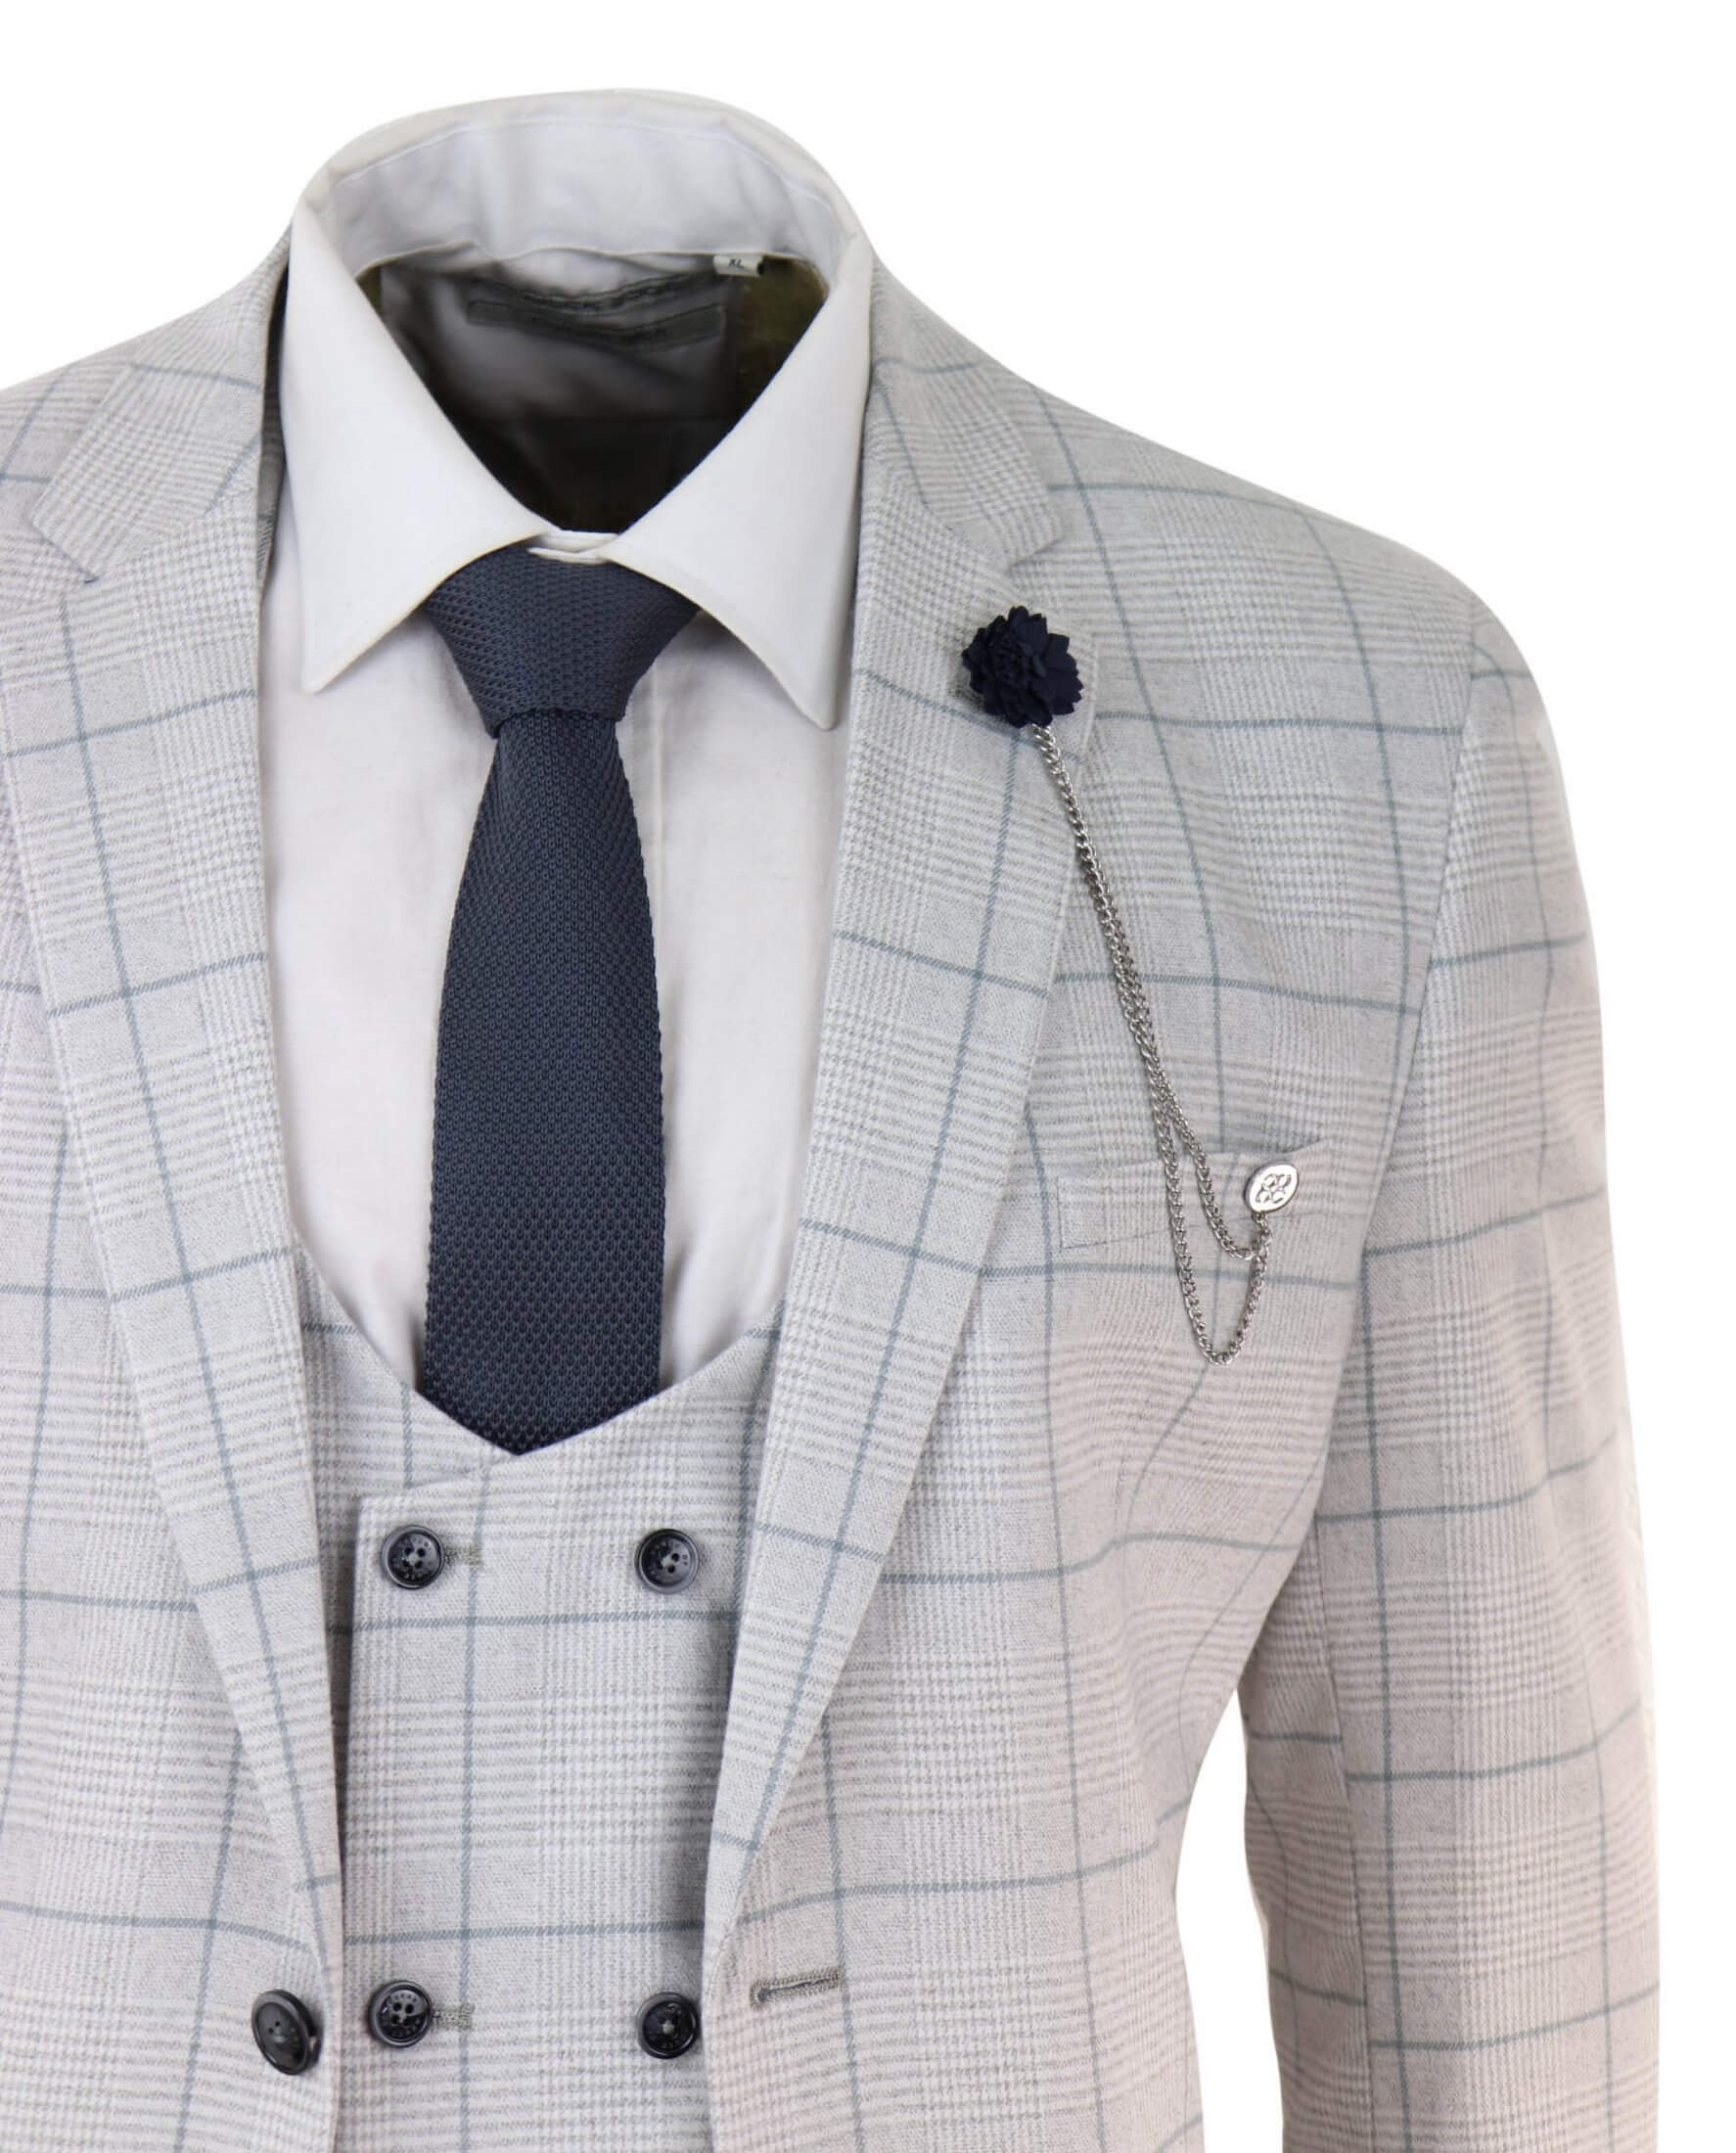 Engager Footpad bundt Light Grey Check 3 Piece Suit: Buy Online - Happy Gentleman United States